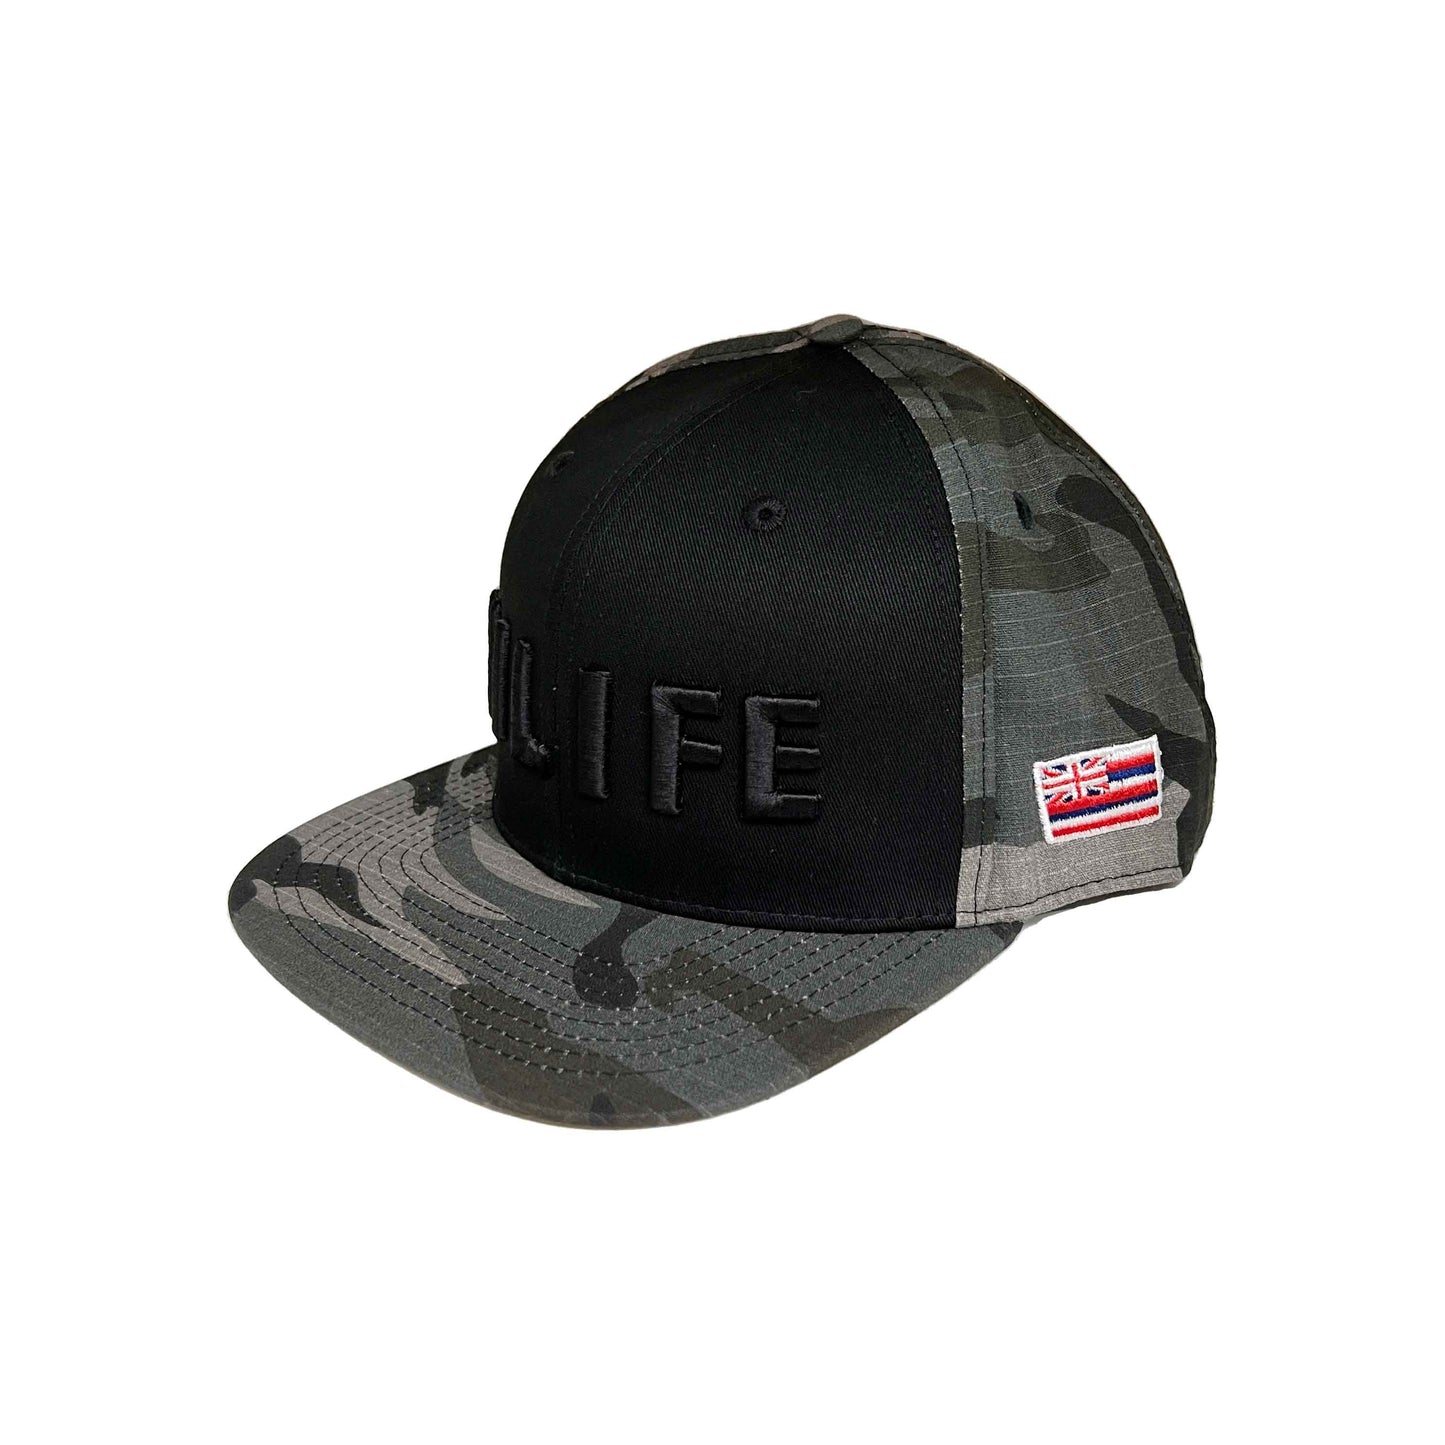 HILIFE logo Snapback hats Black Gray Camo with Black front